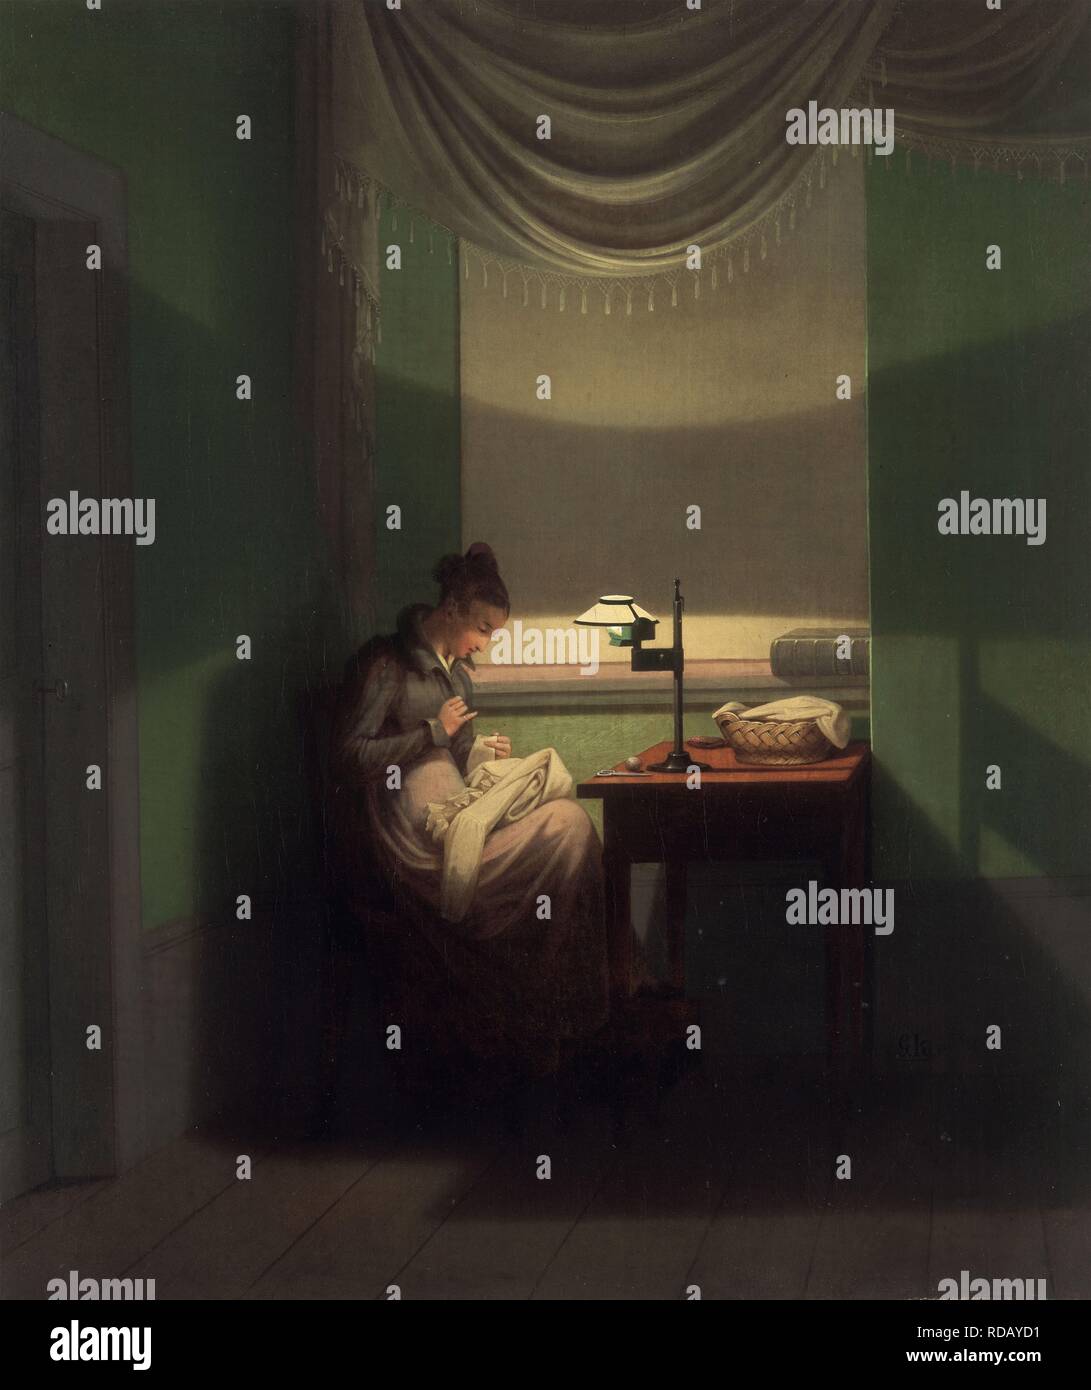 Giovane donna la cucitura mediante la luce di una lampada. Museo: Neue Pinakothek, Monaco di Baviera. Autore: KERSTING, Georg Friedrich. Foto Stock